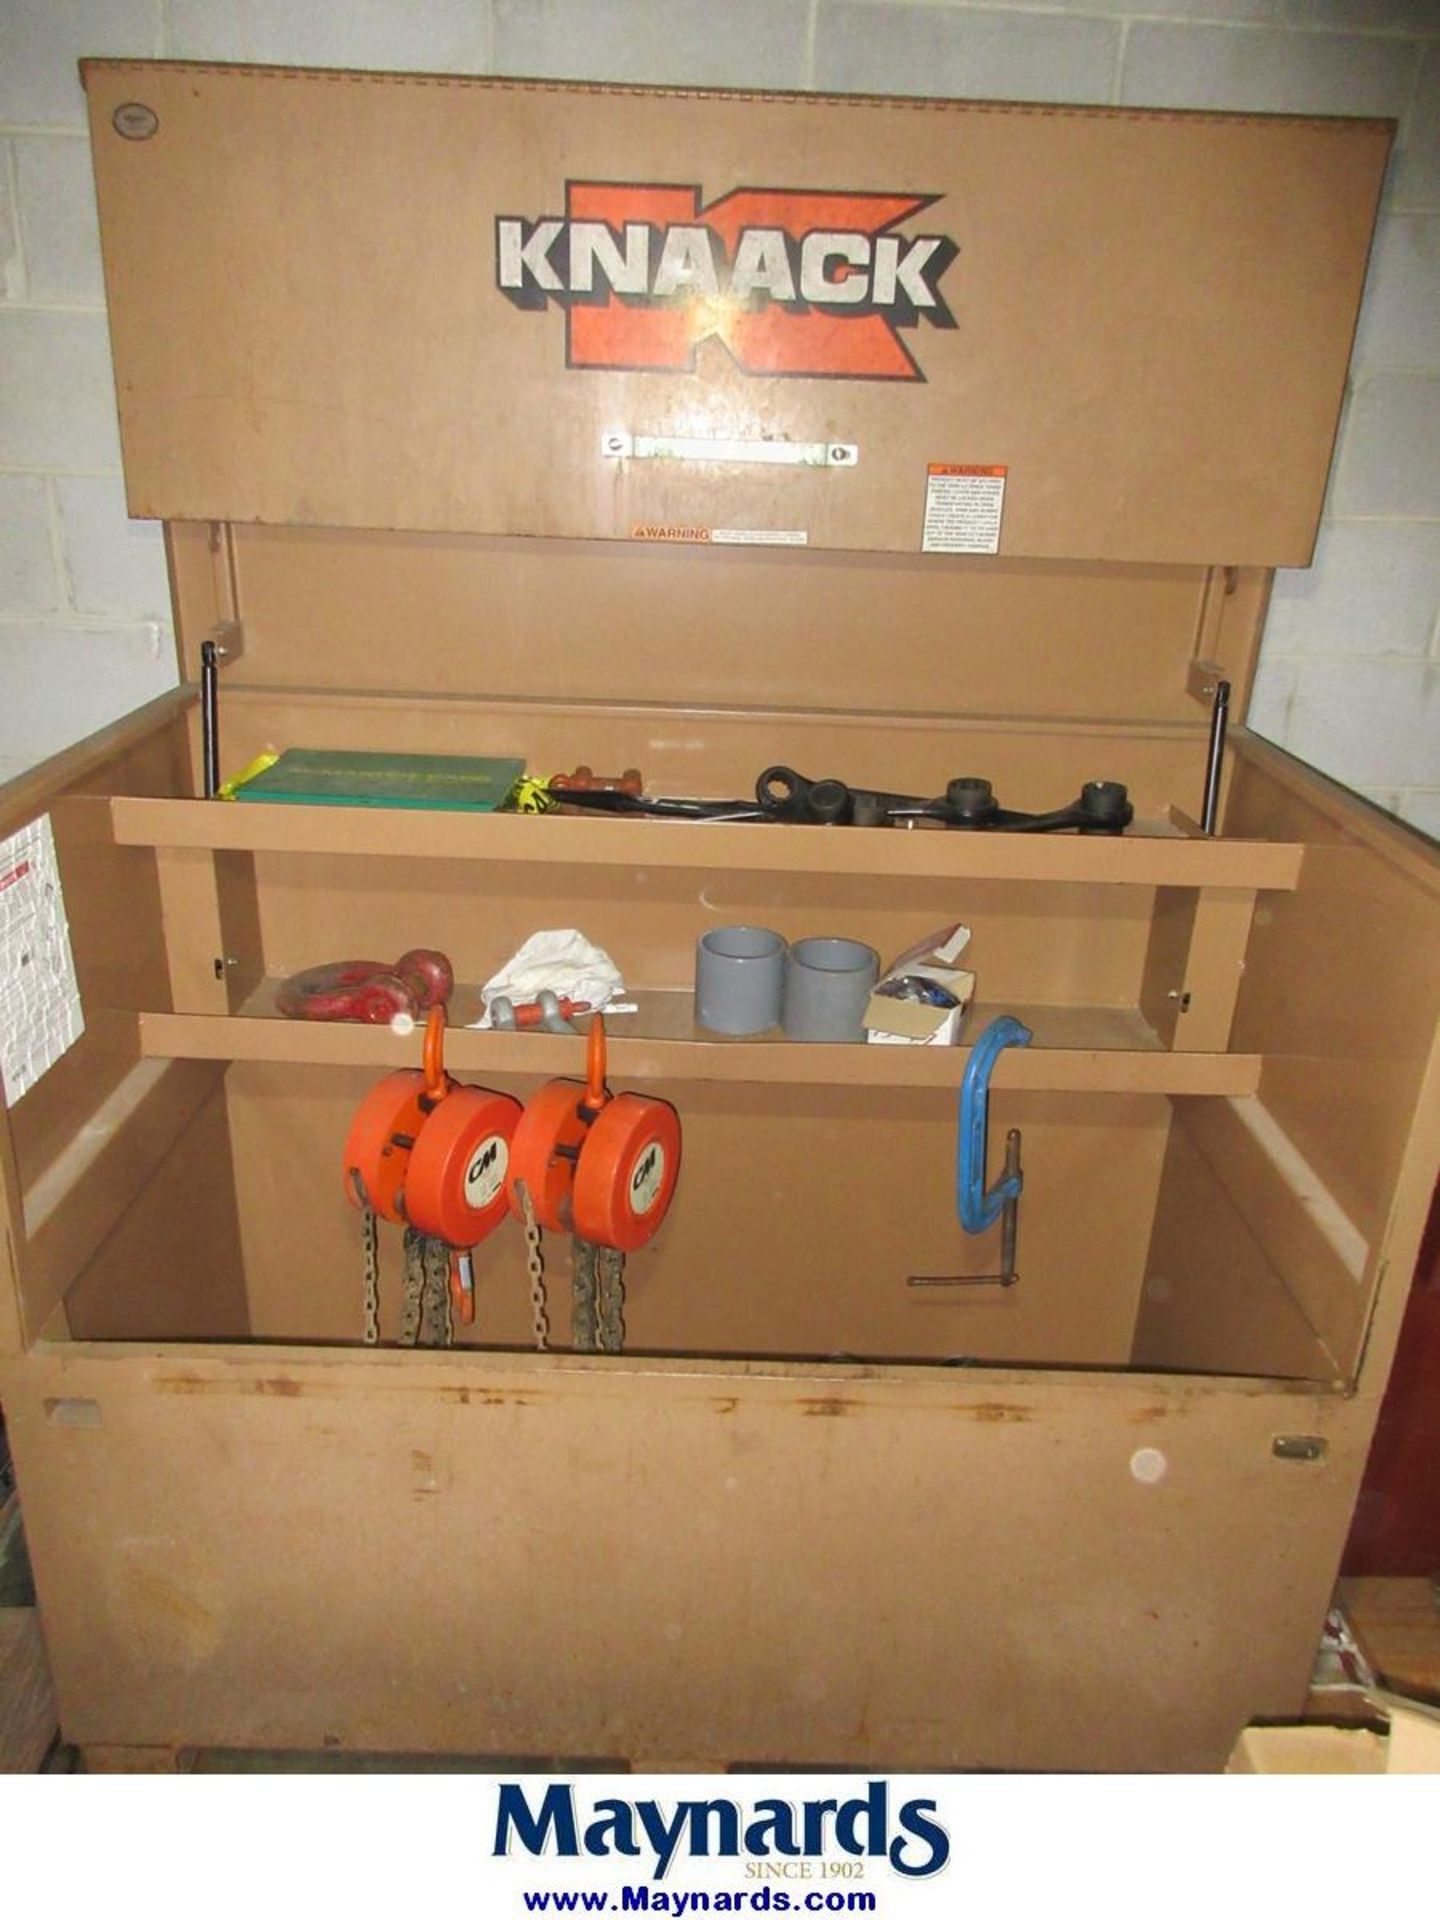 Knaack Jobmaster 89 Locking Jobsite Tool Chest - Image 2 of 4